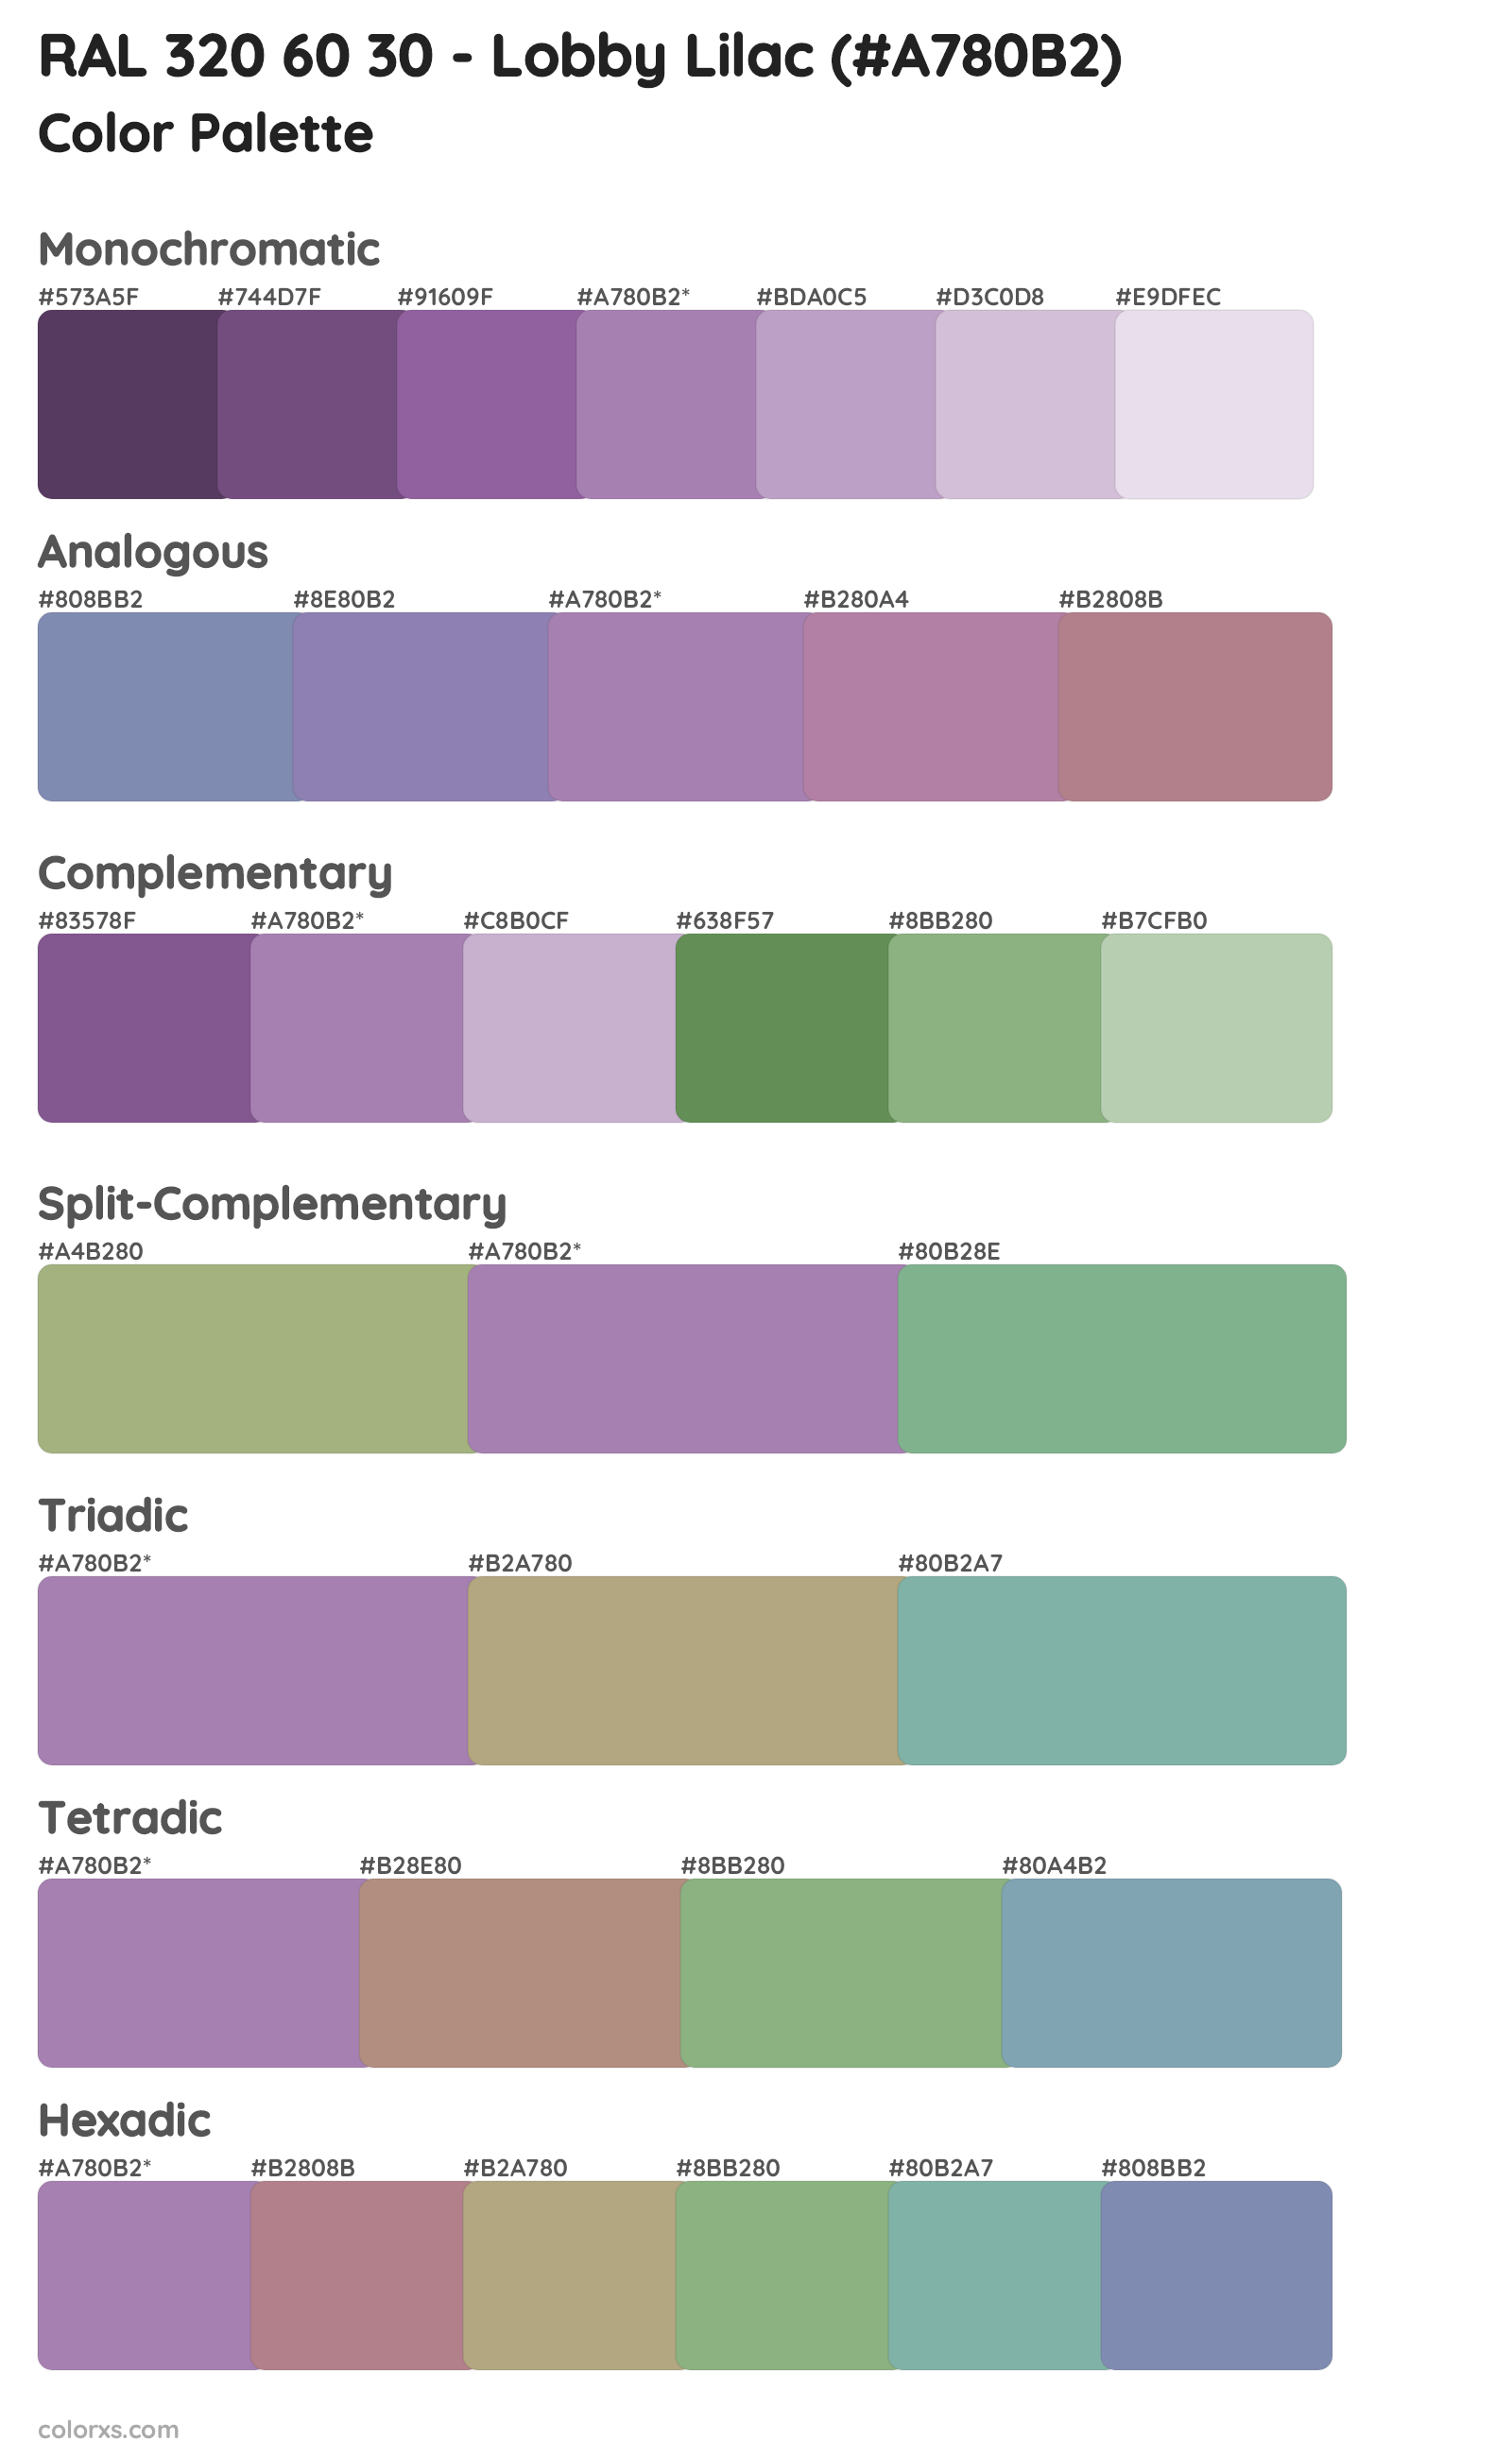 RAL 320 60 30 - Lobby Lilac Color Scheme Palettes